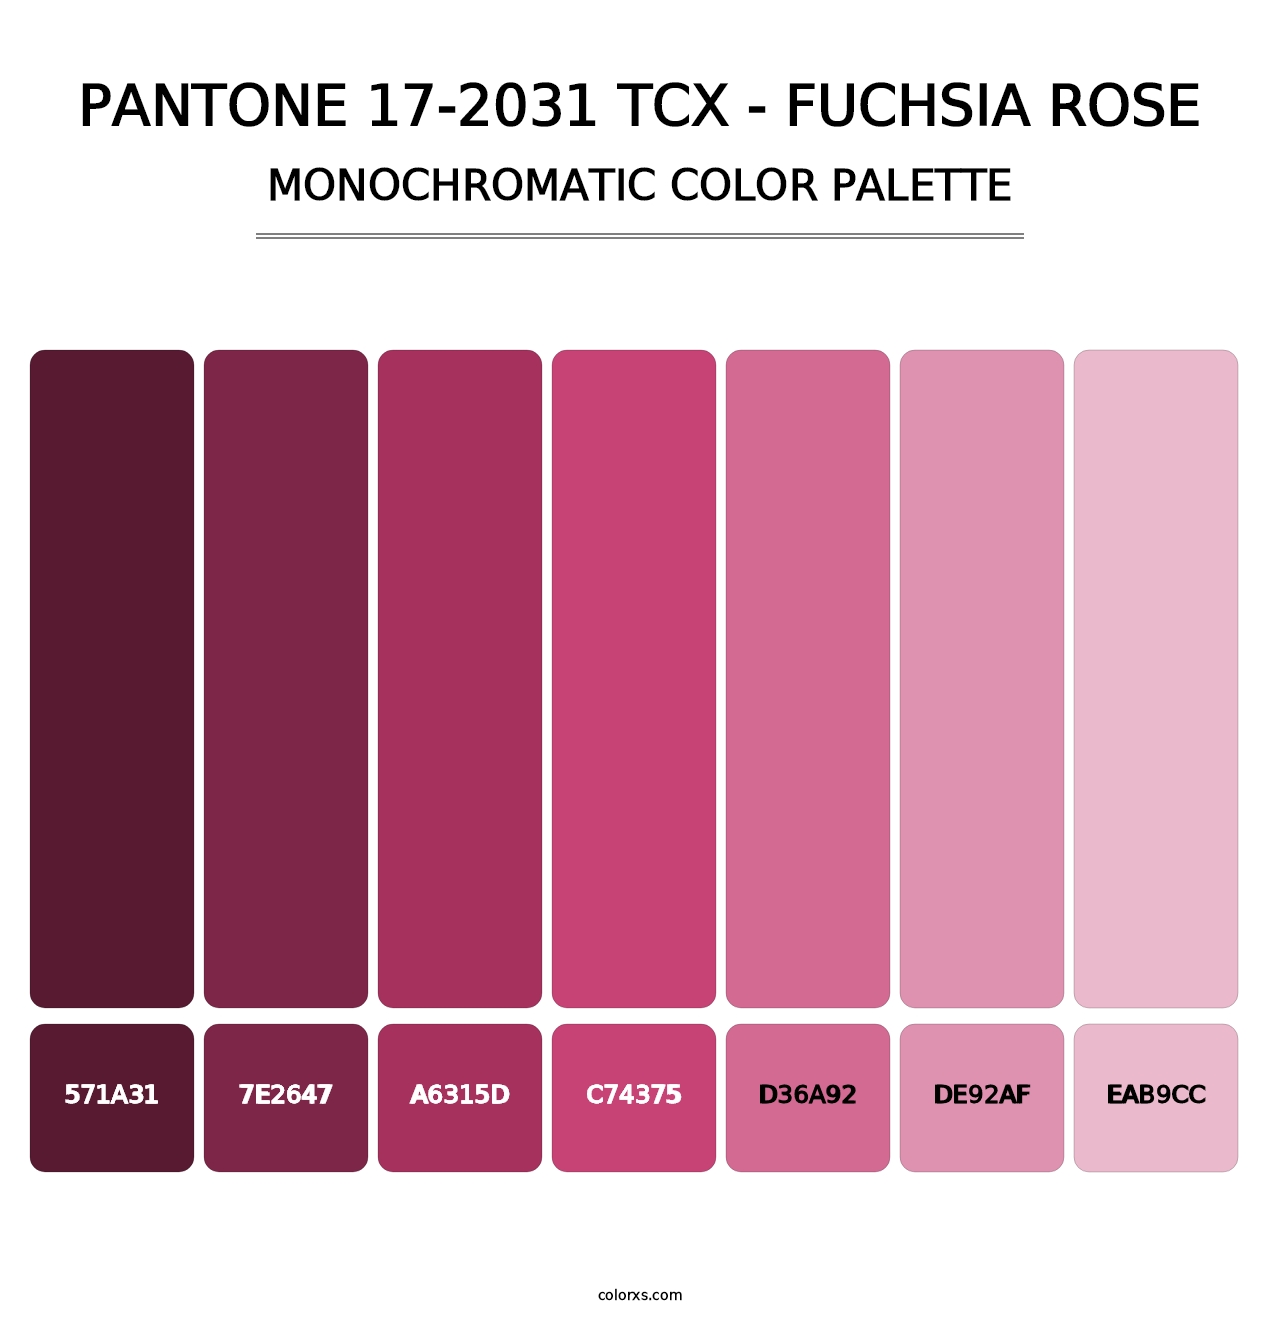 PANTONE 17-2031 TCX - Fuchsia Rose - Monochromatic Color Palette